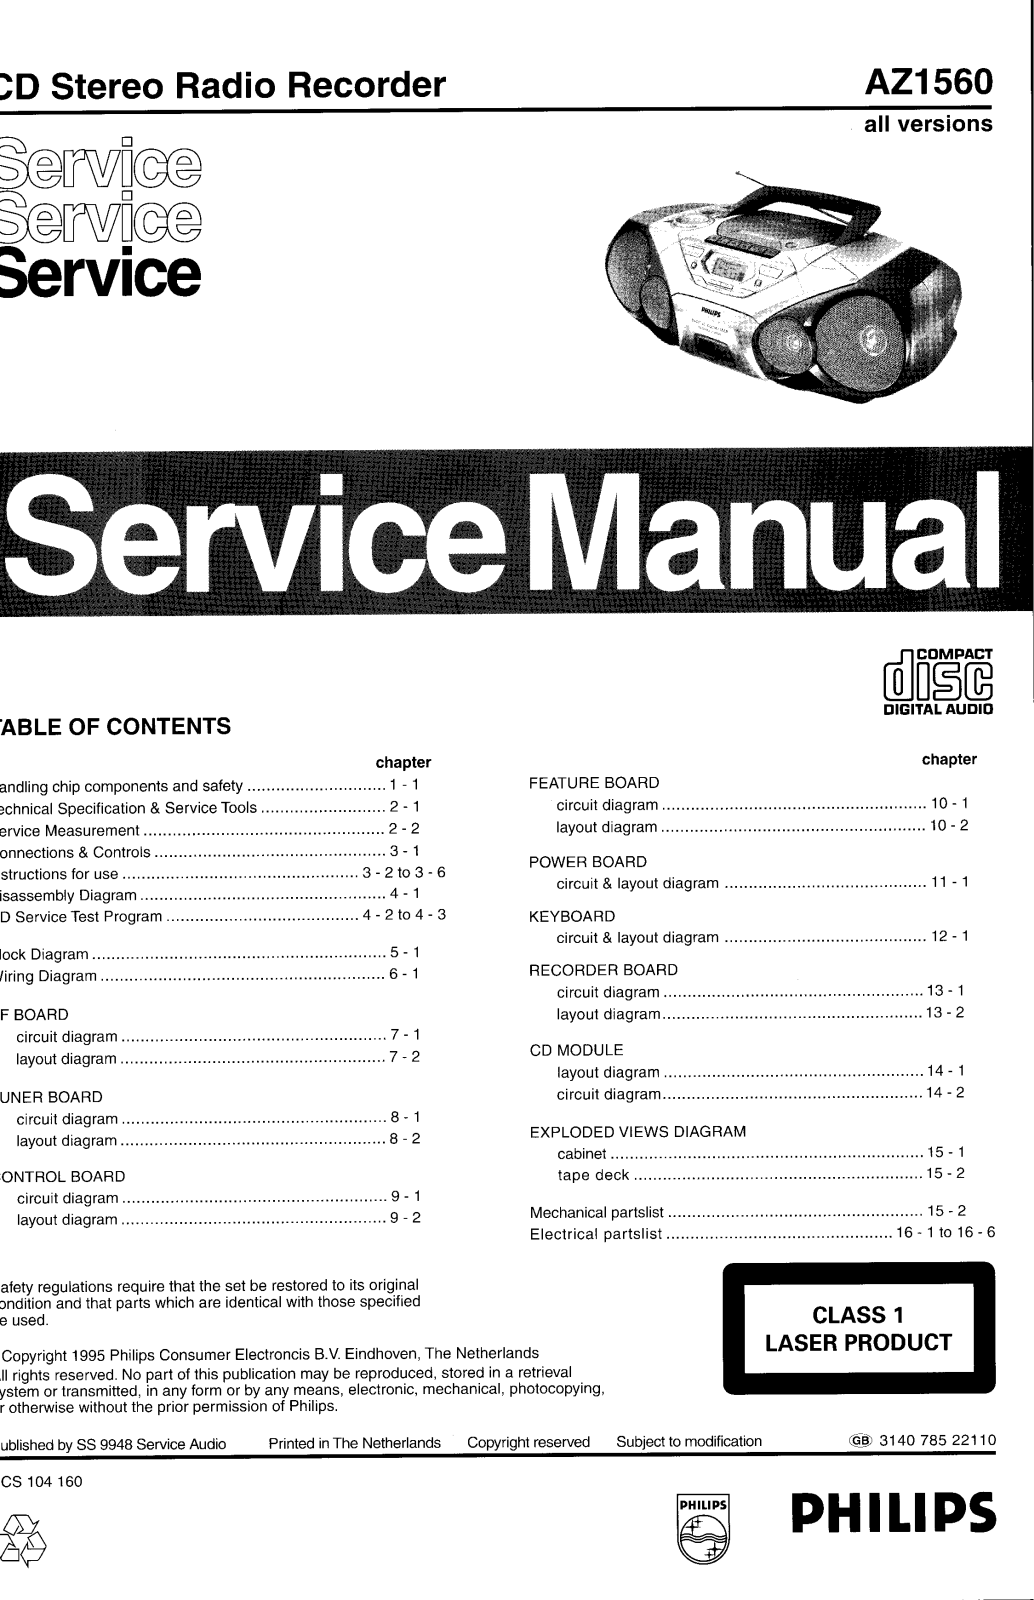 Philips AZ1560 Service Manual